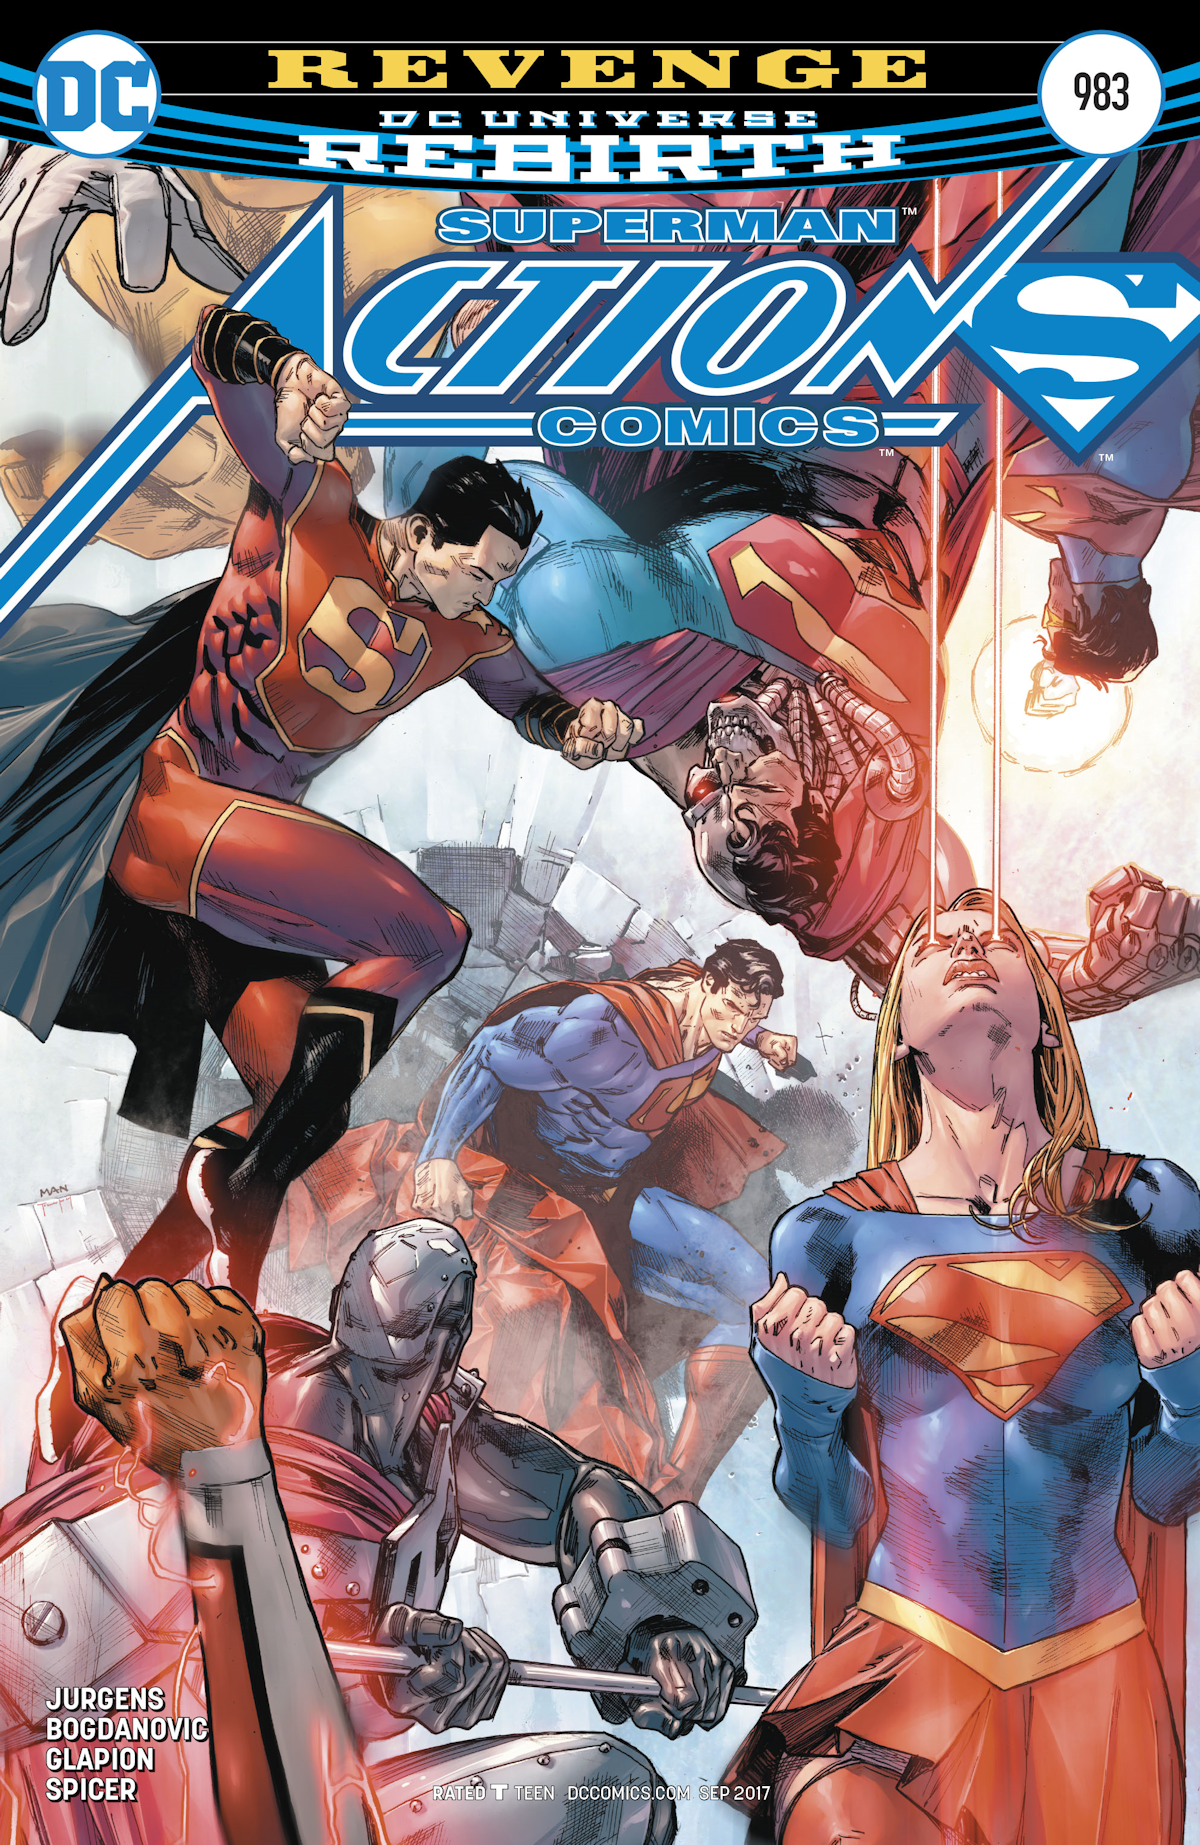 Action Comics 983 (Cover A)